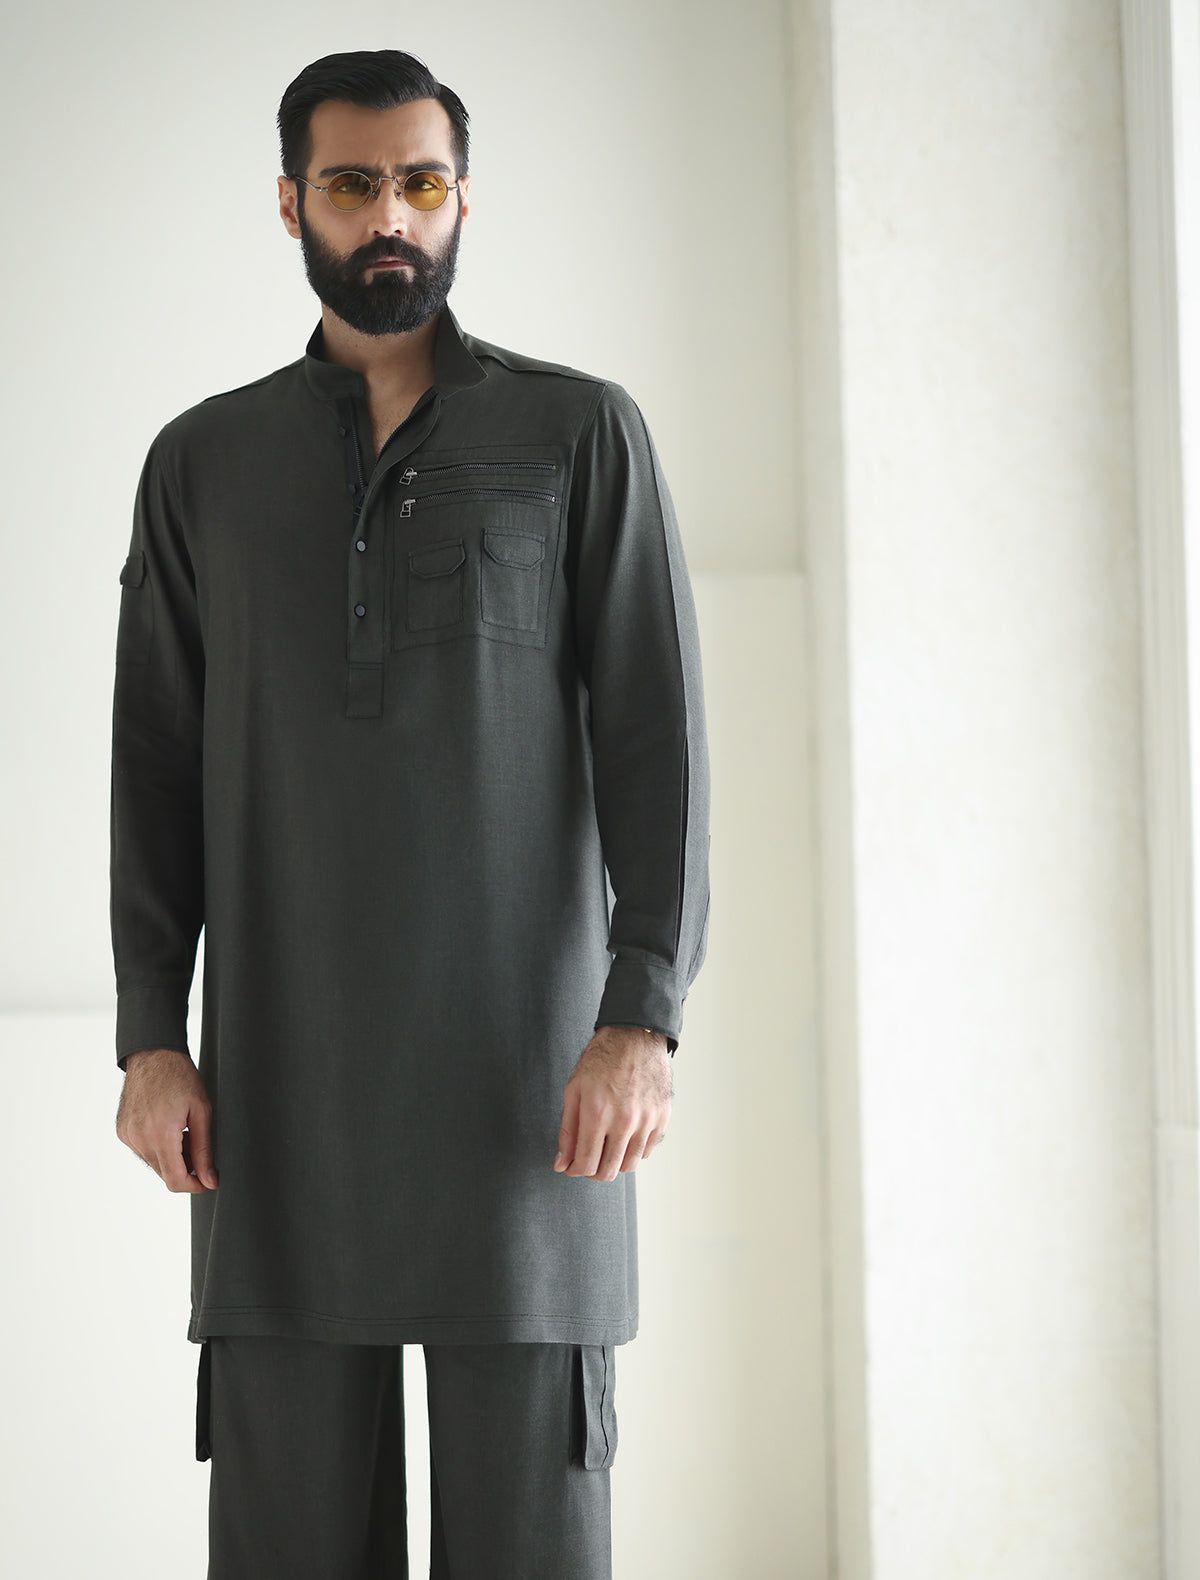 Pakistani Menswear | Ismail Farid - GRAY DESIGNER KURTA PAJAMA - Khanumjan  Pakistani Clothes and Designer Dresses in UK, USA 